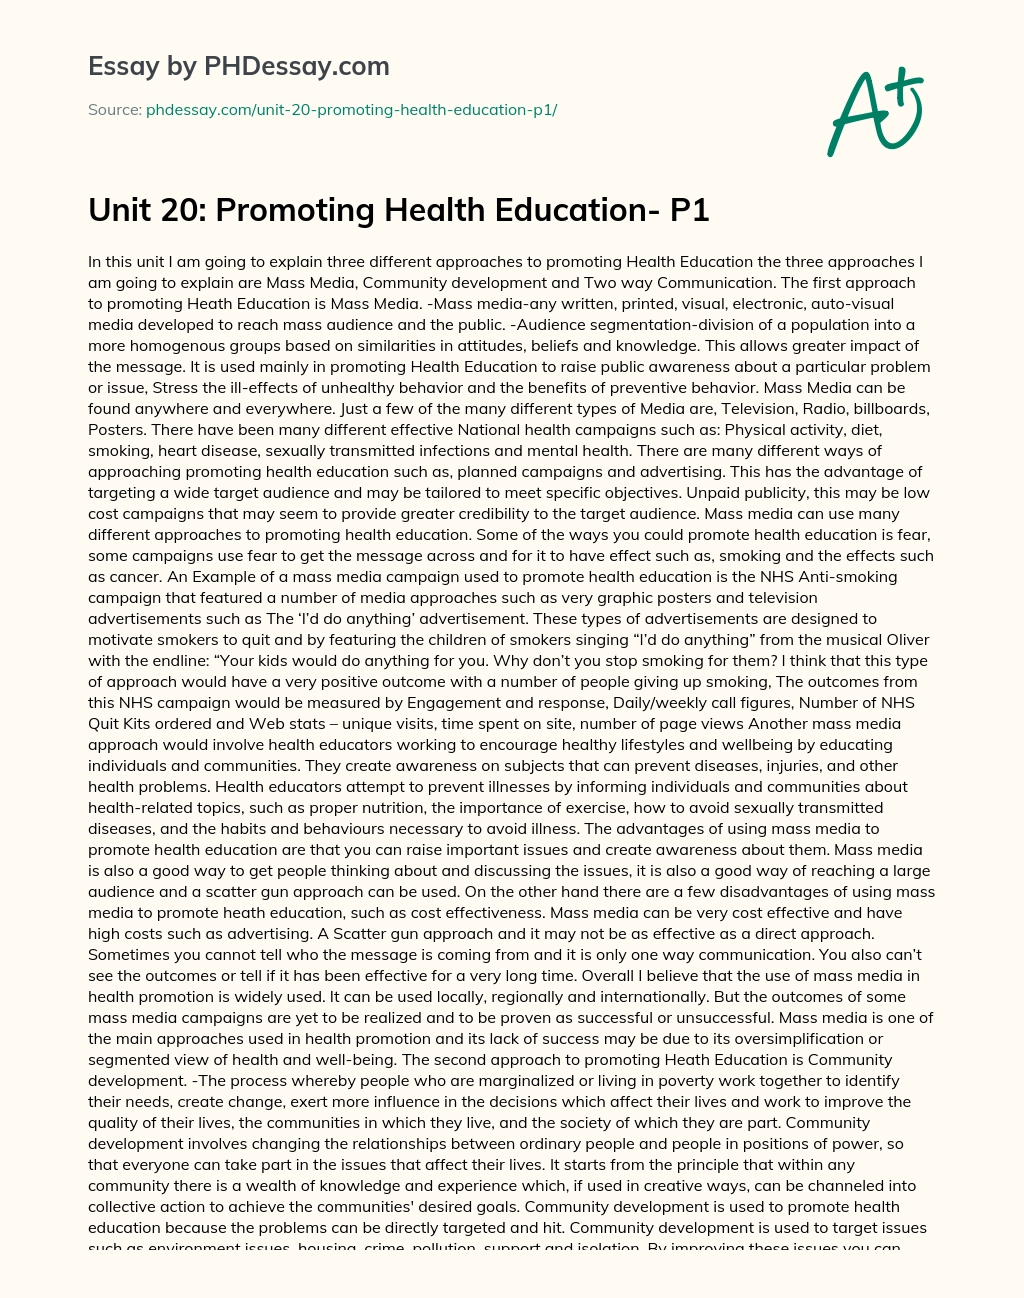 Unit 20: Promoting Health Education- P1 essay